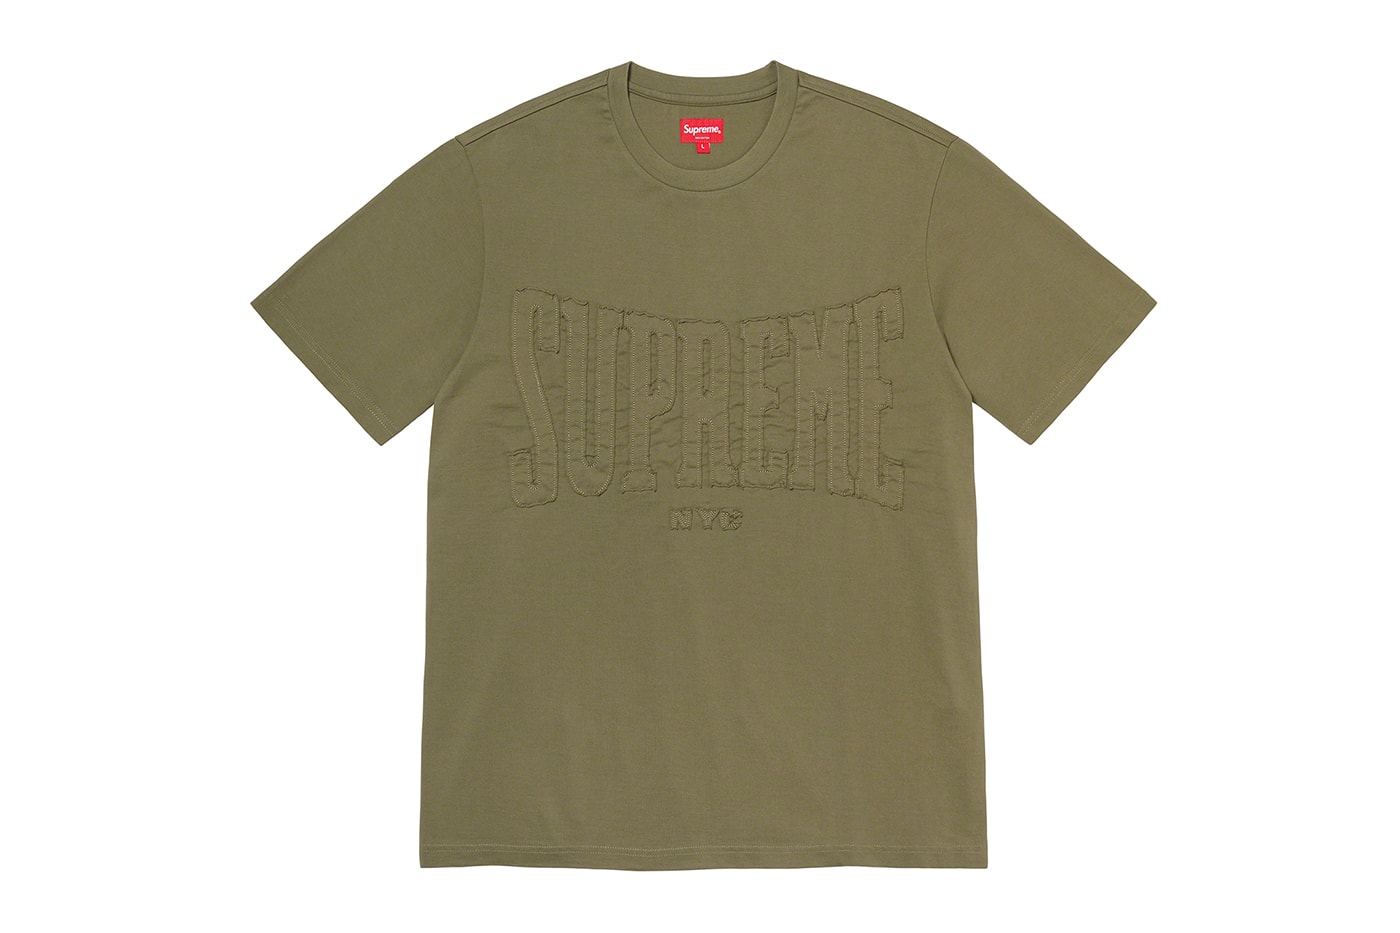 Supreme Archive  Tee shirt designs, Shirt designs, Supreme t shirt